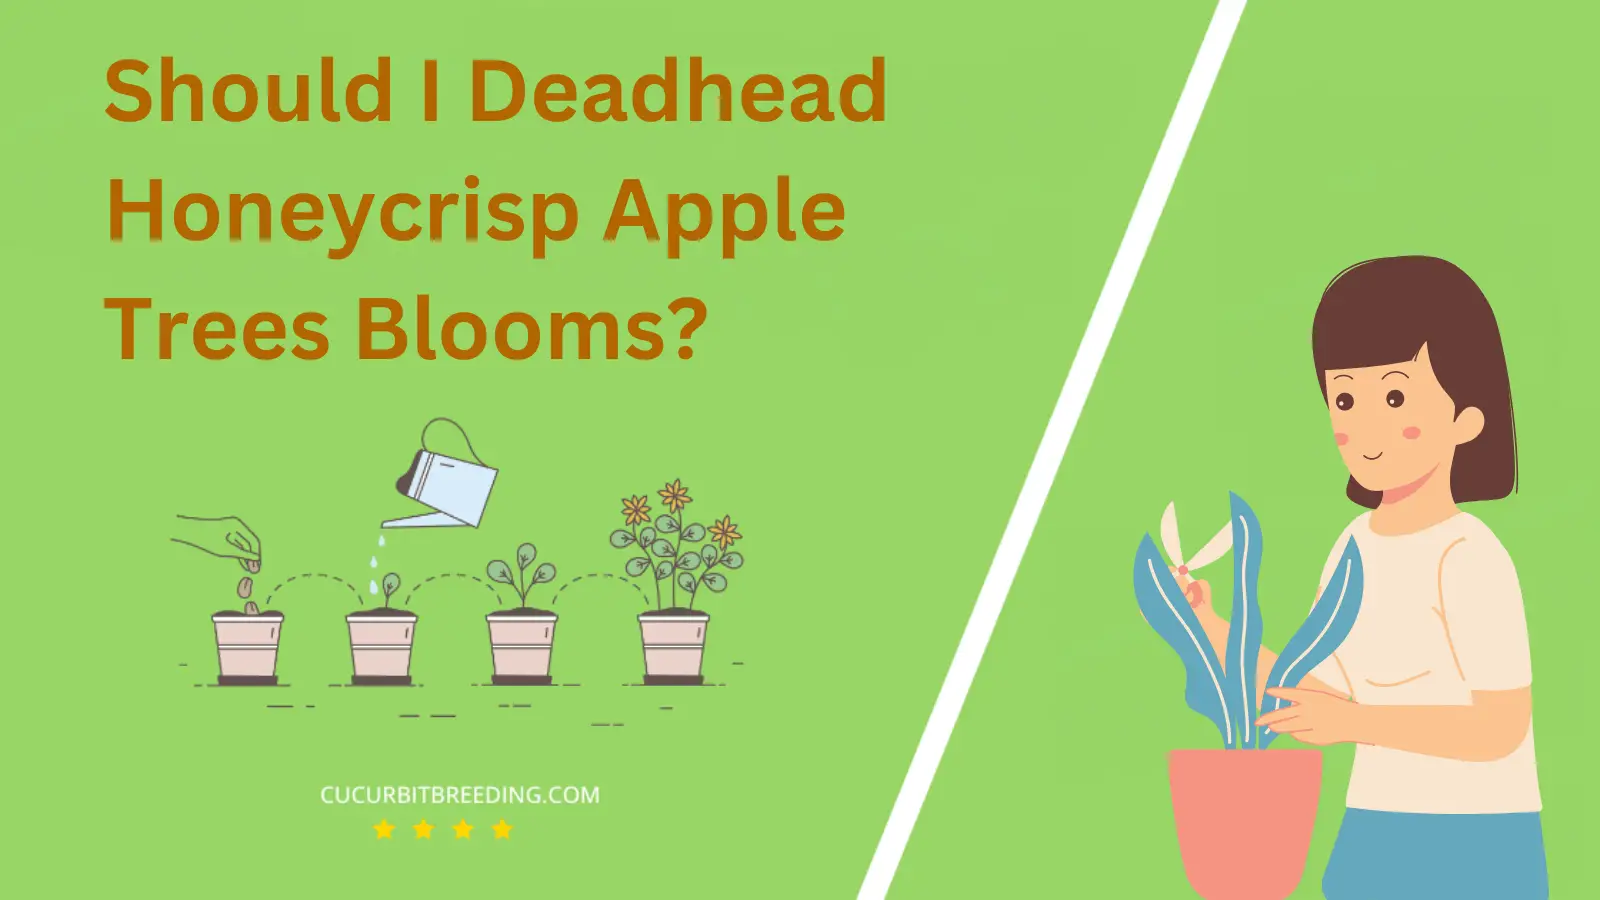 Should I Deadhead Honeycrisp Apple Trees Blooms?